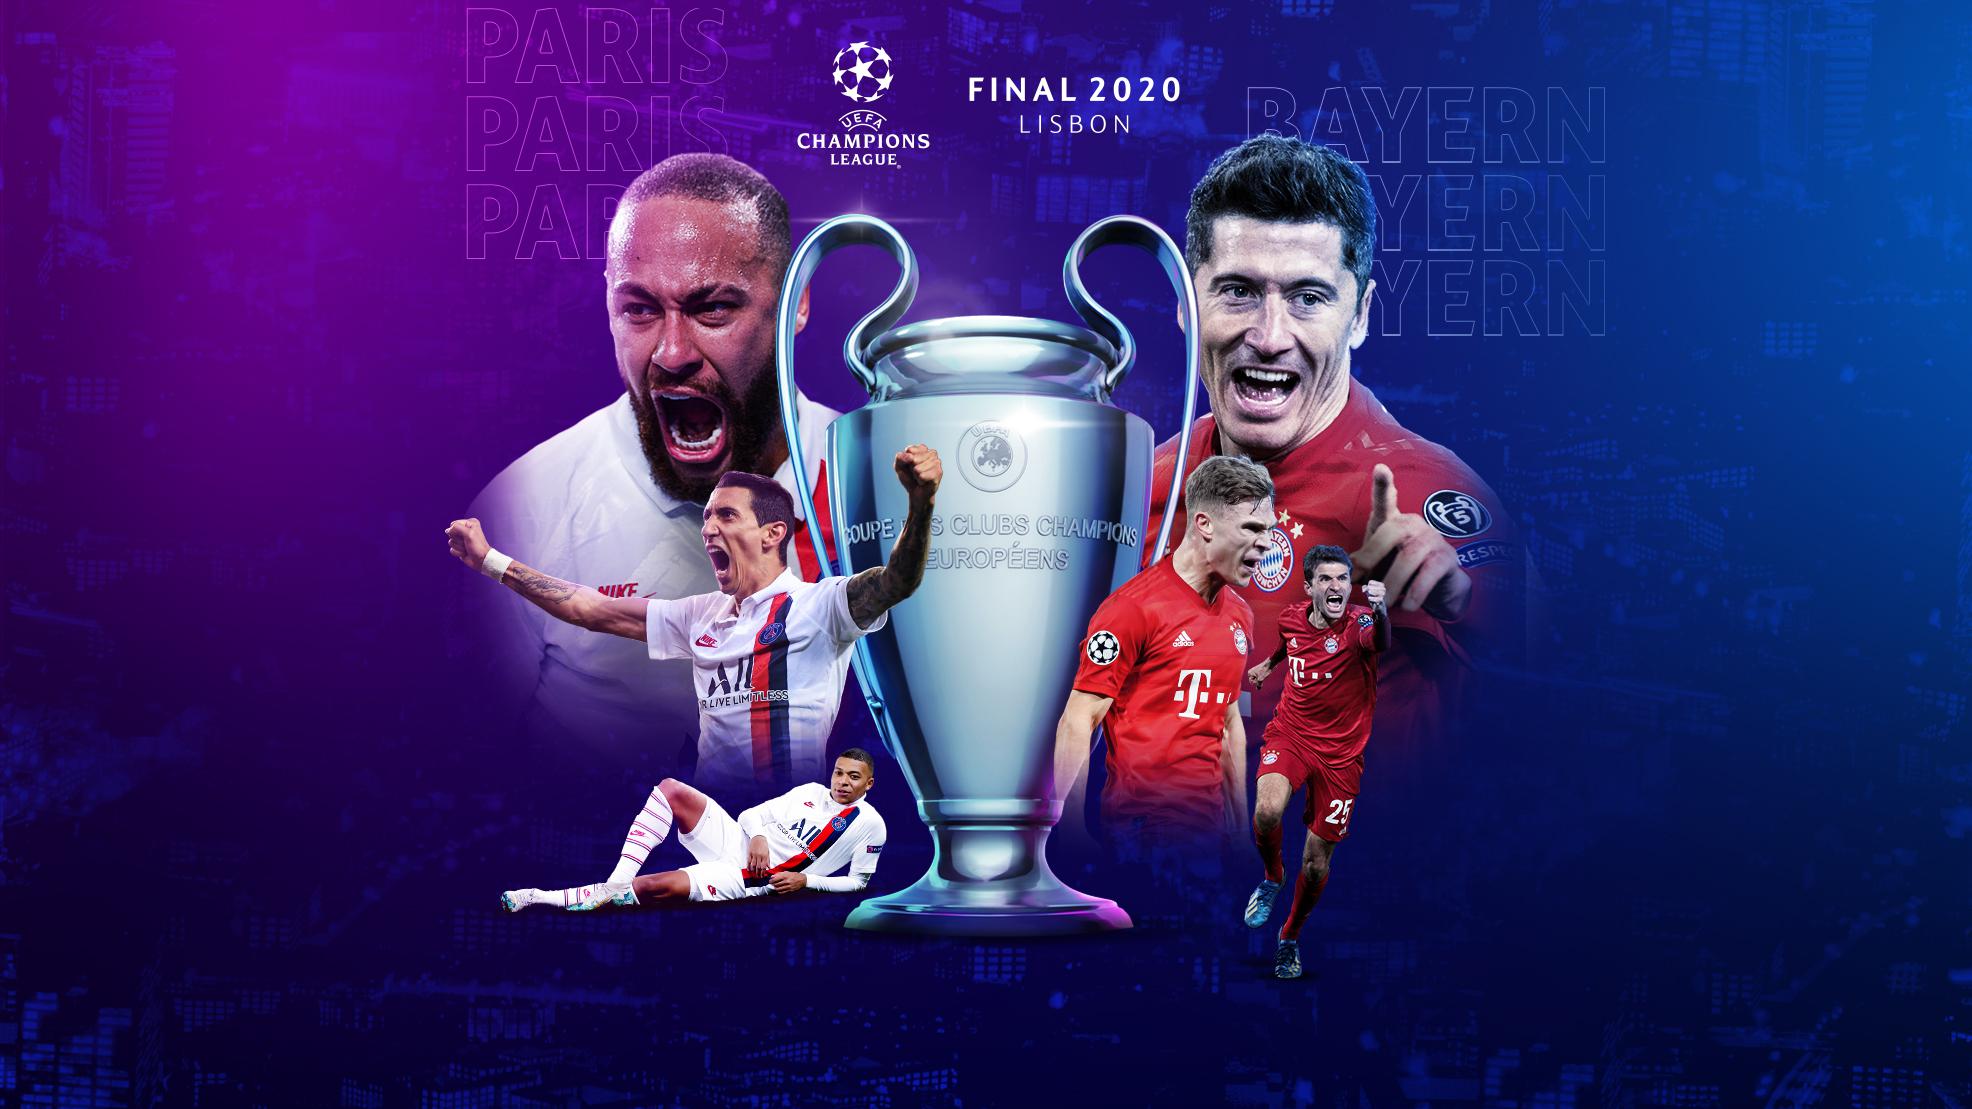 Paris vs Bayern Champions League final preview: where team news, form guide | UEFA Champions League | UEFA.com